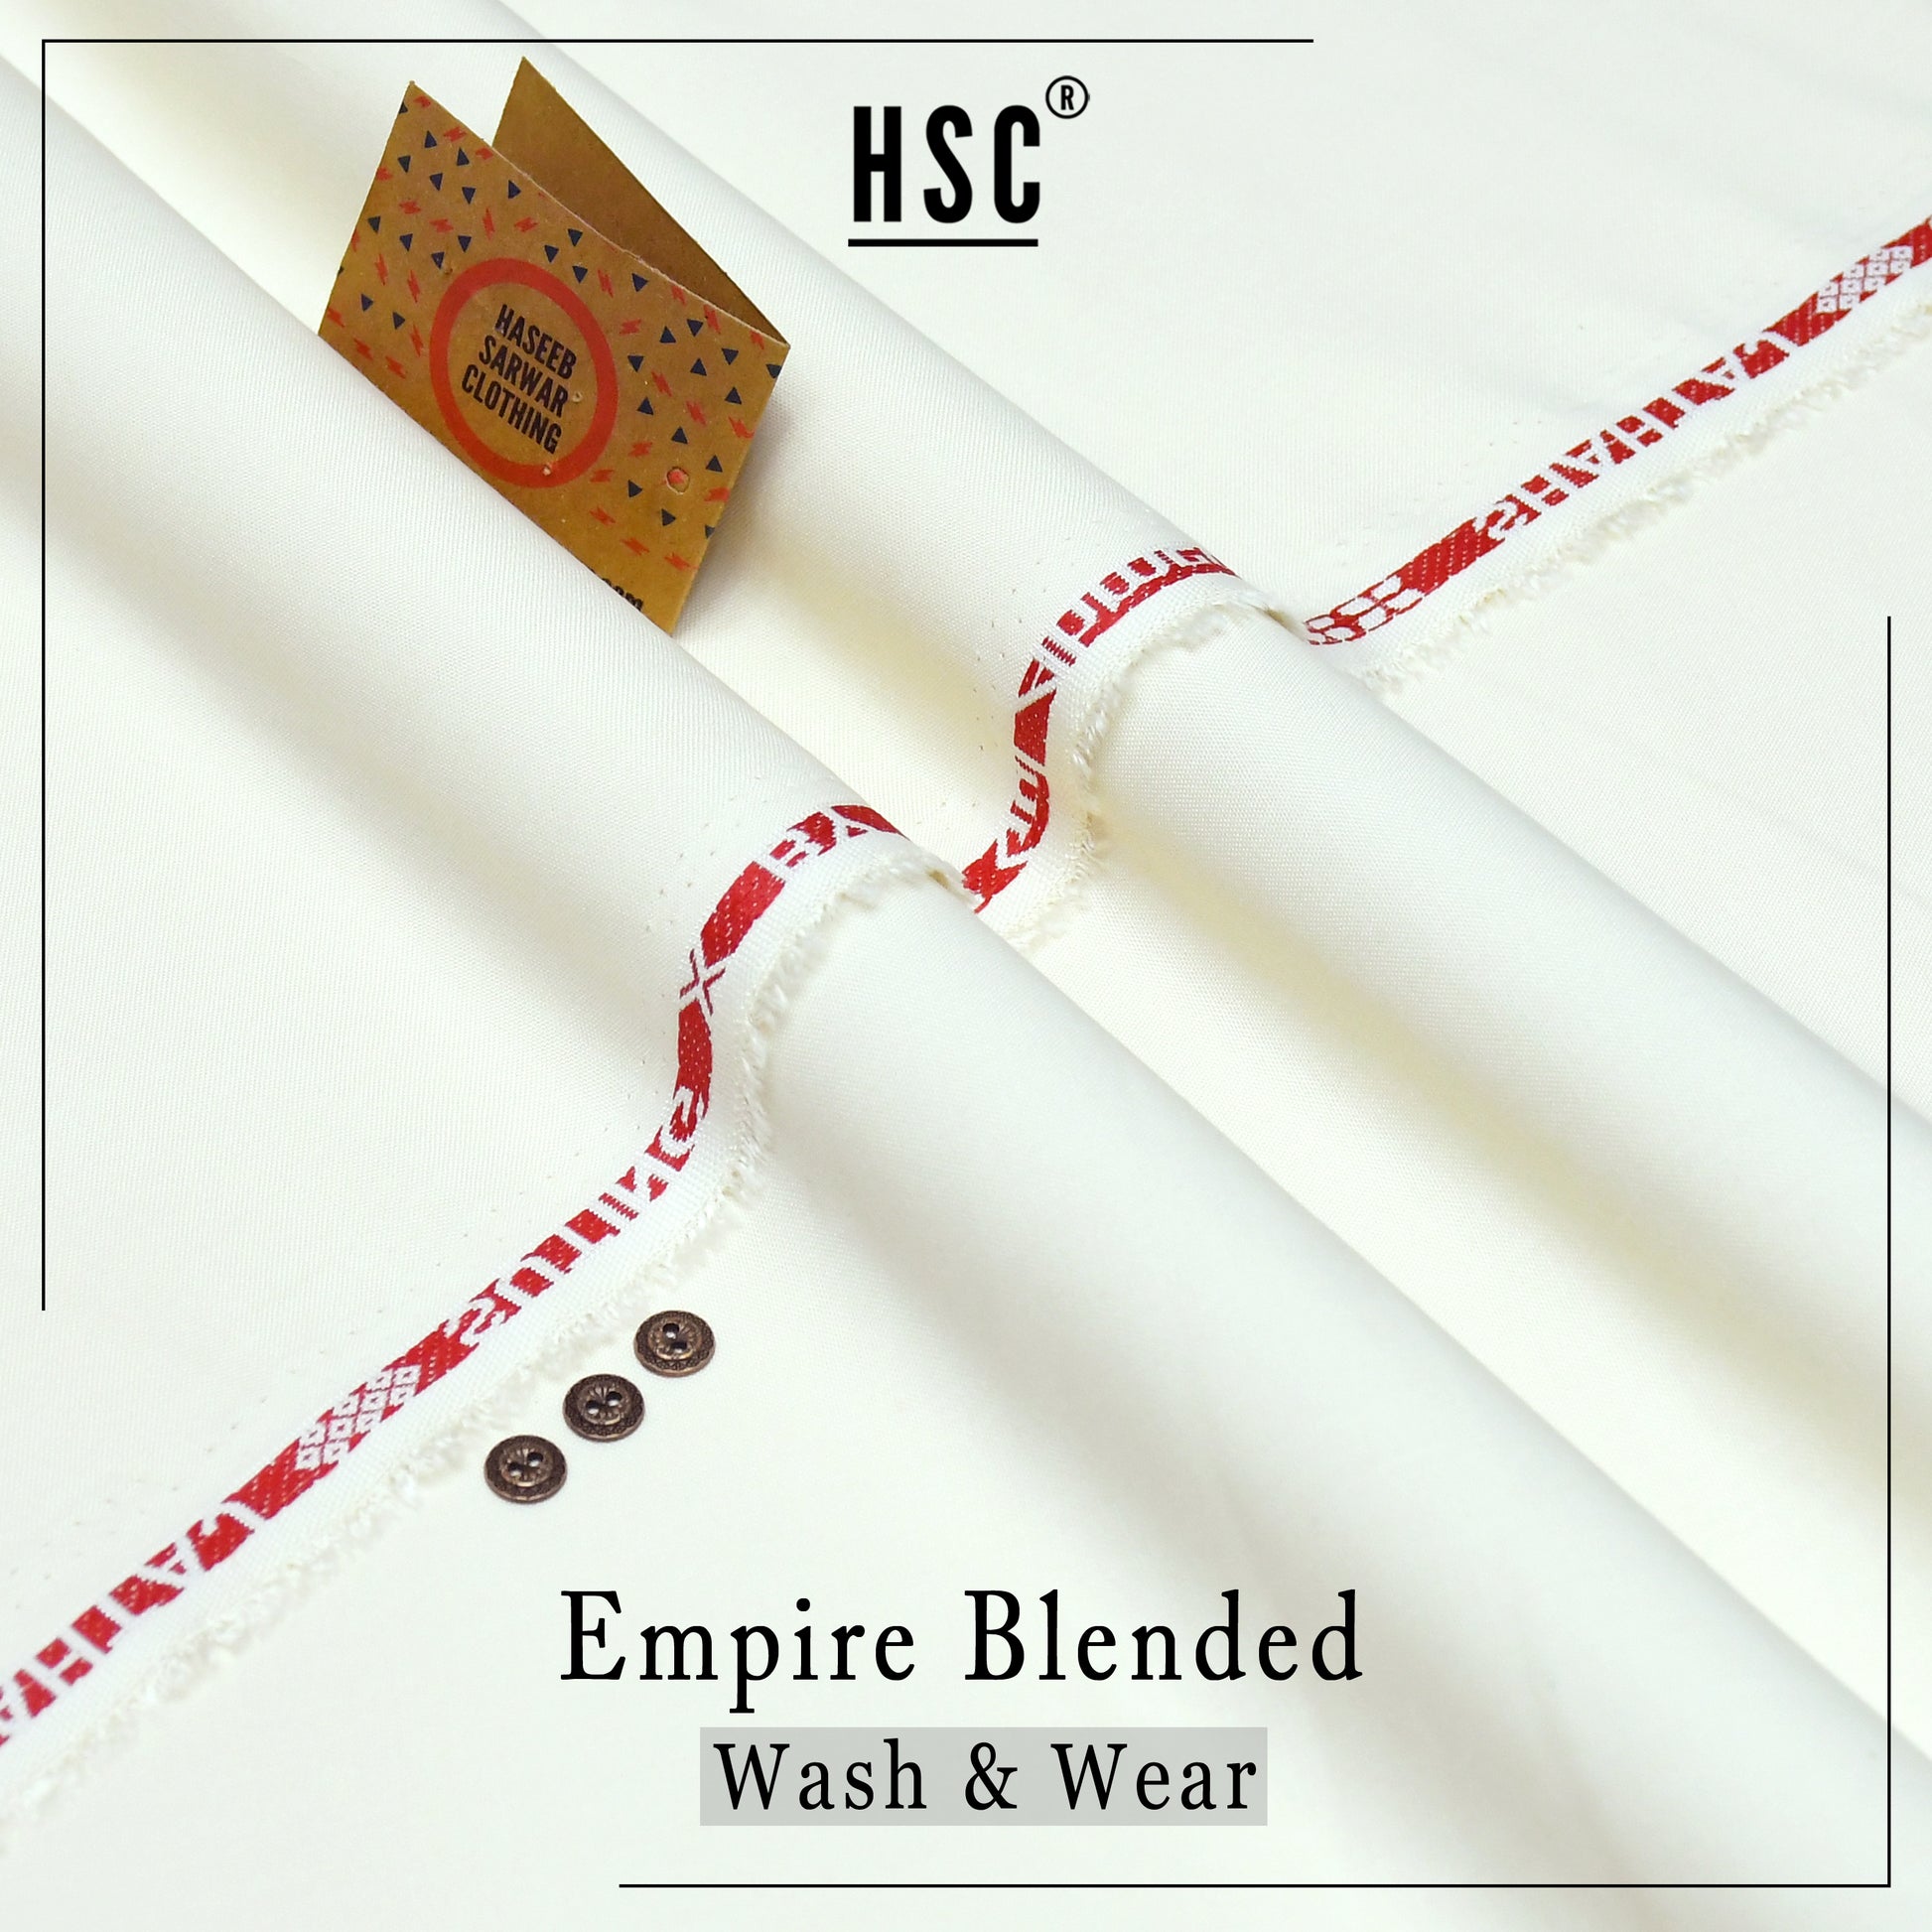 Buy 1 Get 1 Free Empire Blended Wash&Wear - EBW1 HSC